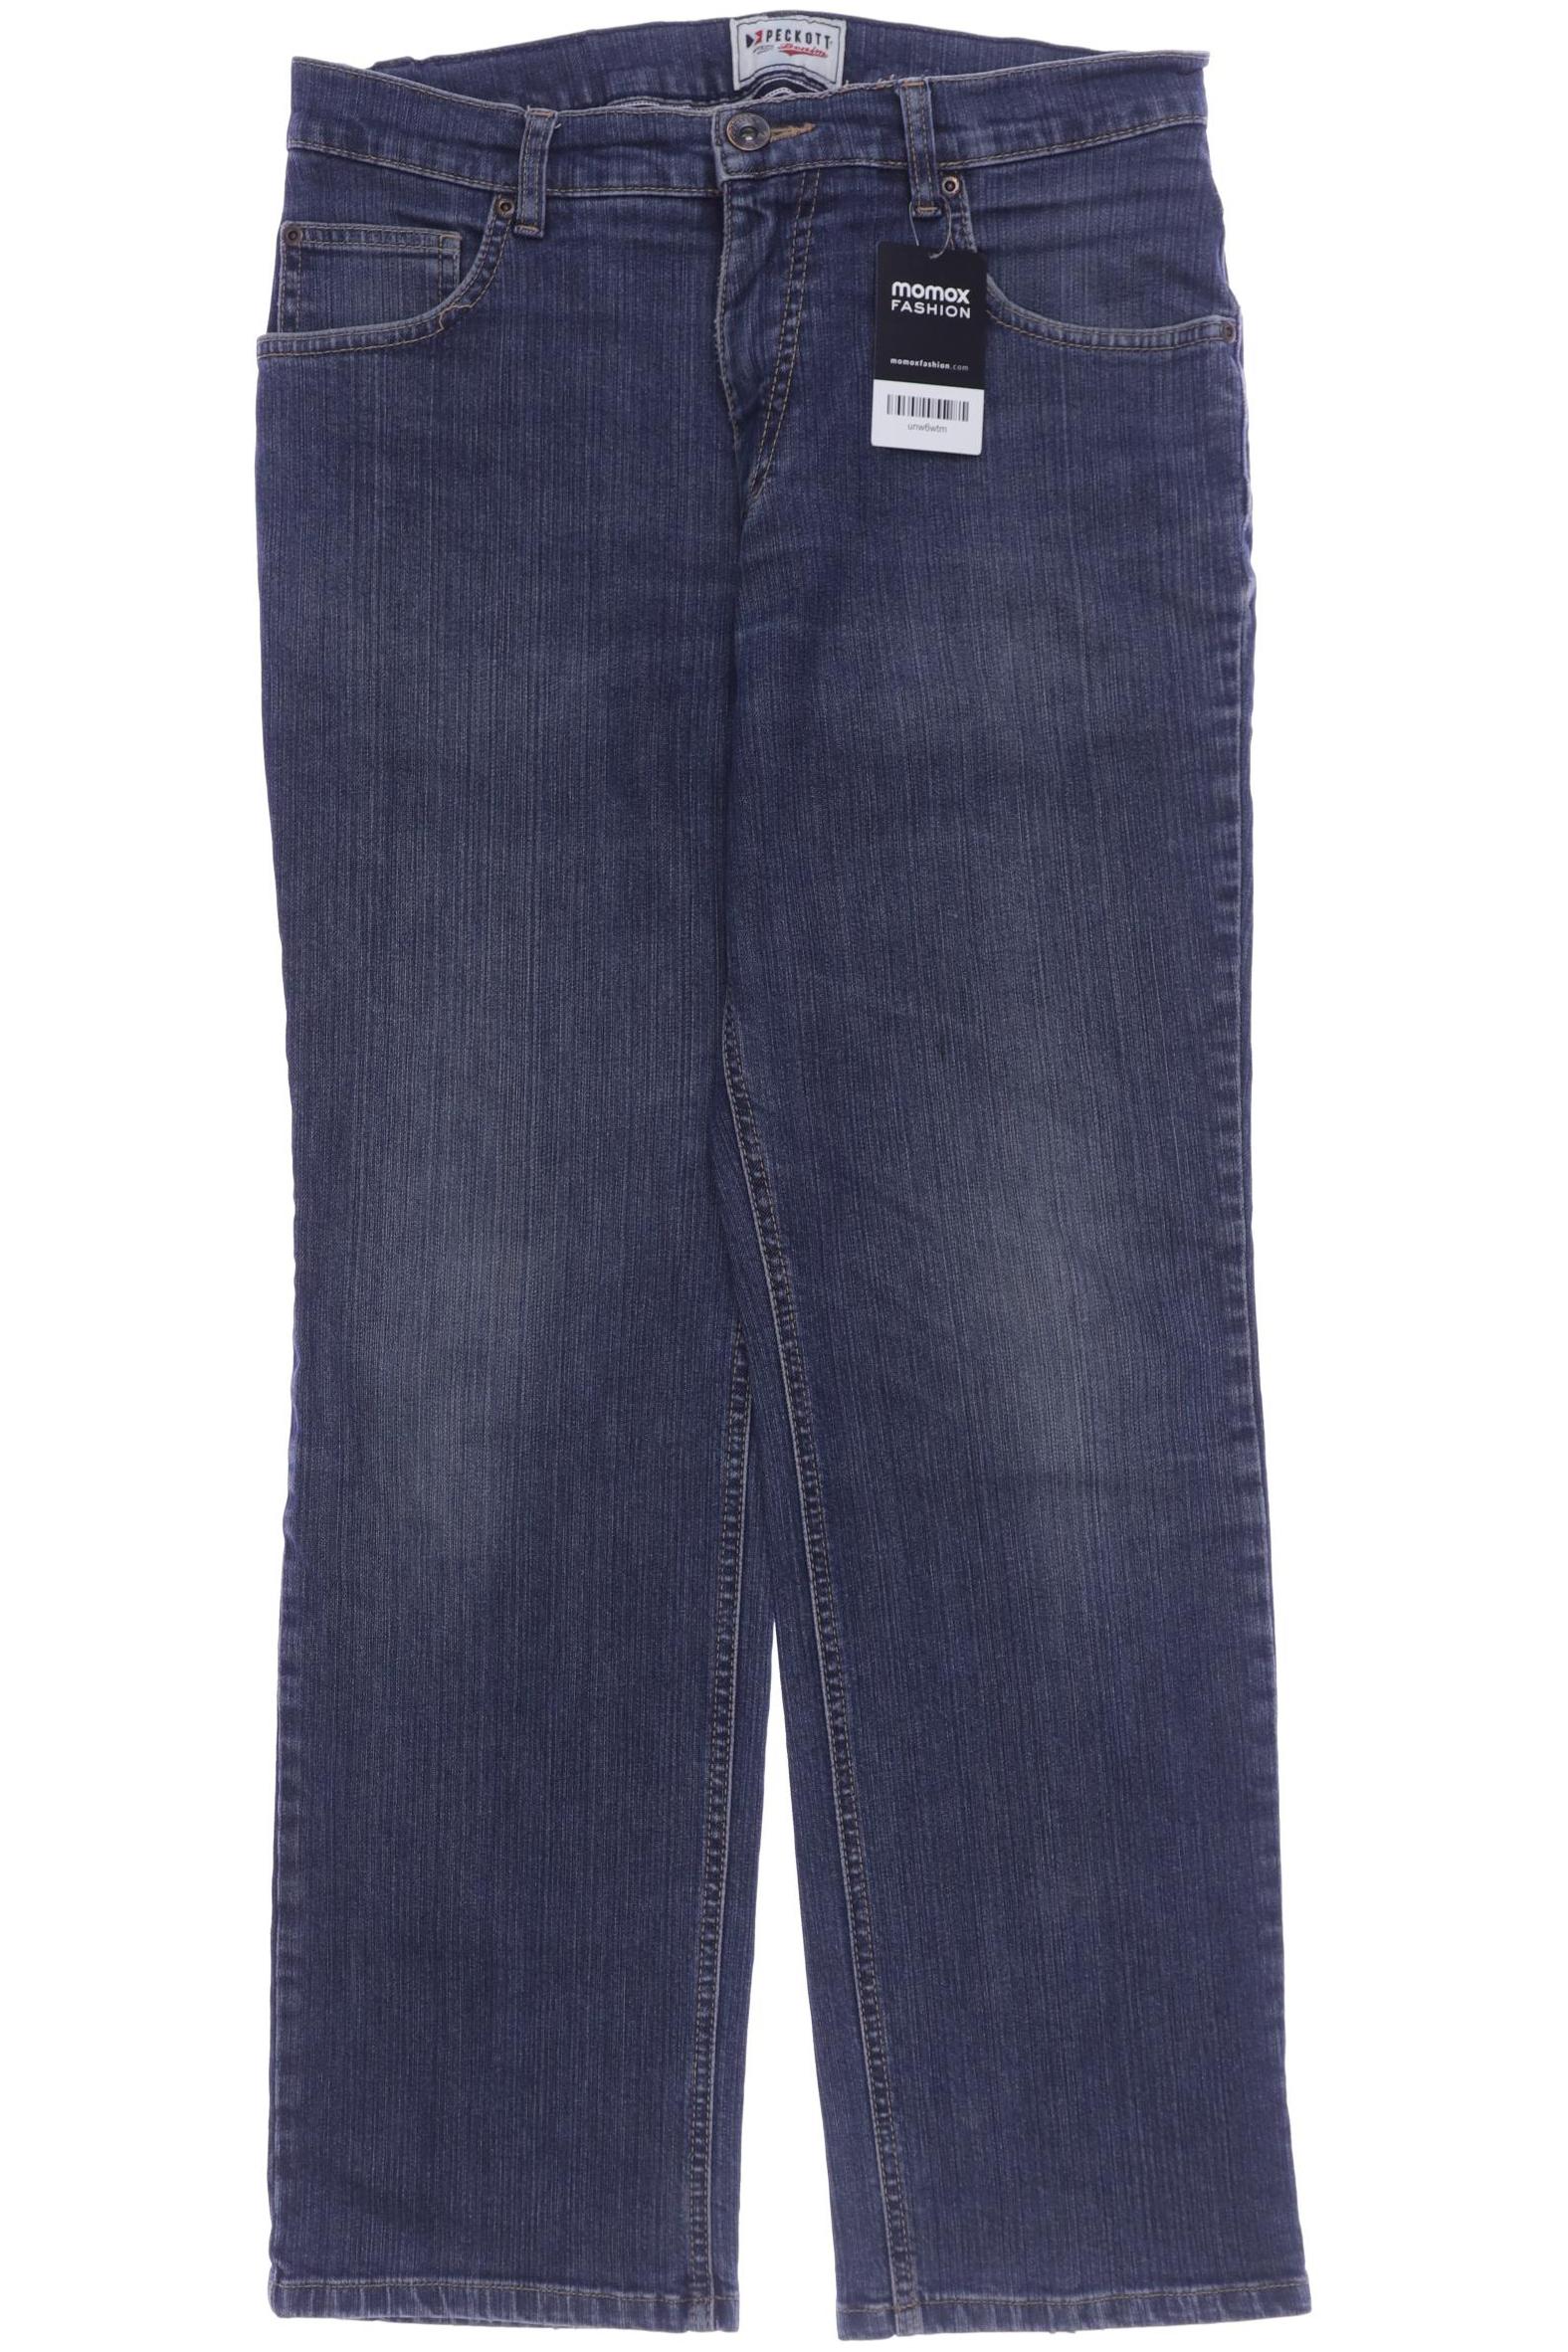 Peckott Herren Jeans, blau, Gr. 50 von PECKOTT